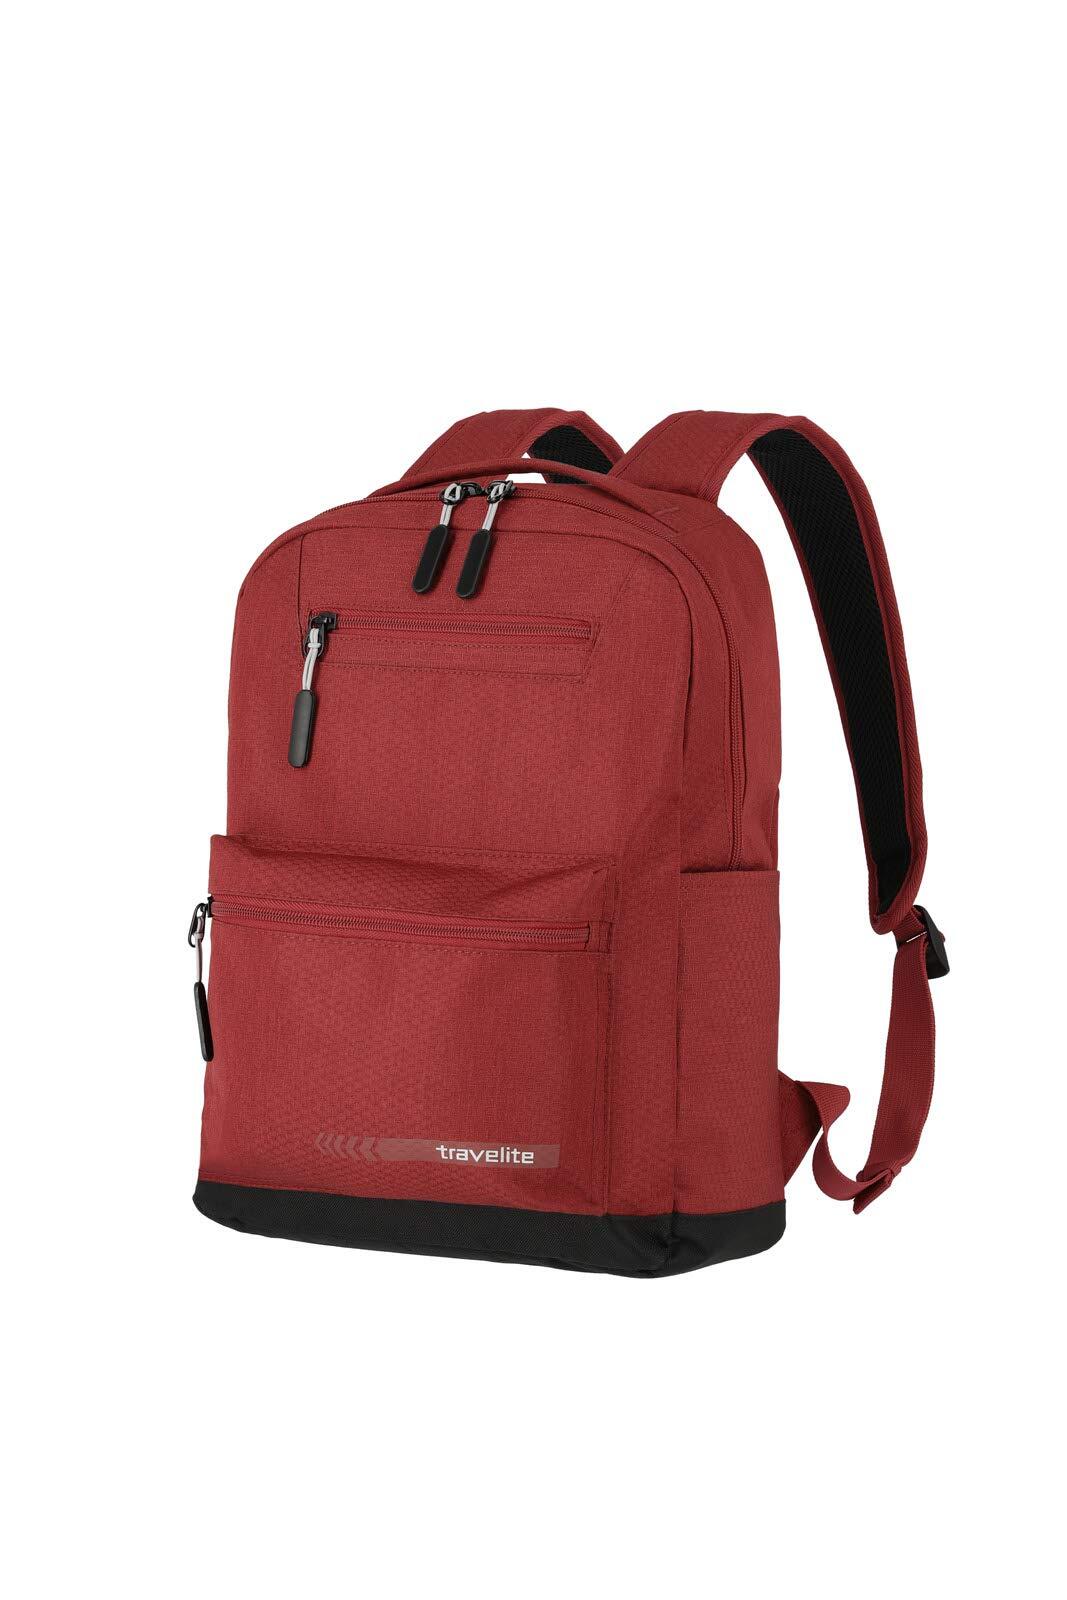 travelite Travelite Kick Off Backpack M red Rood